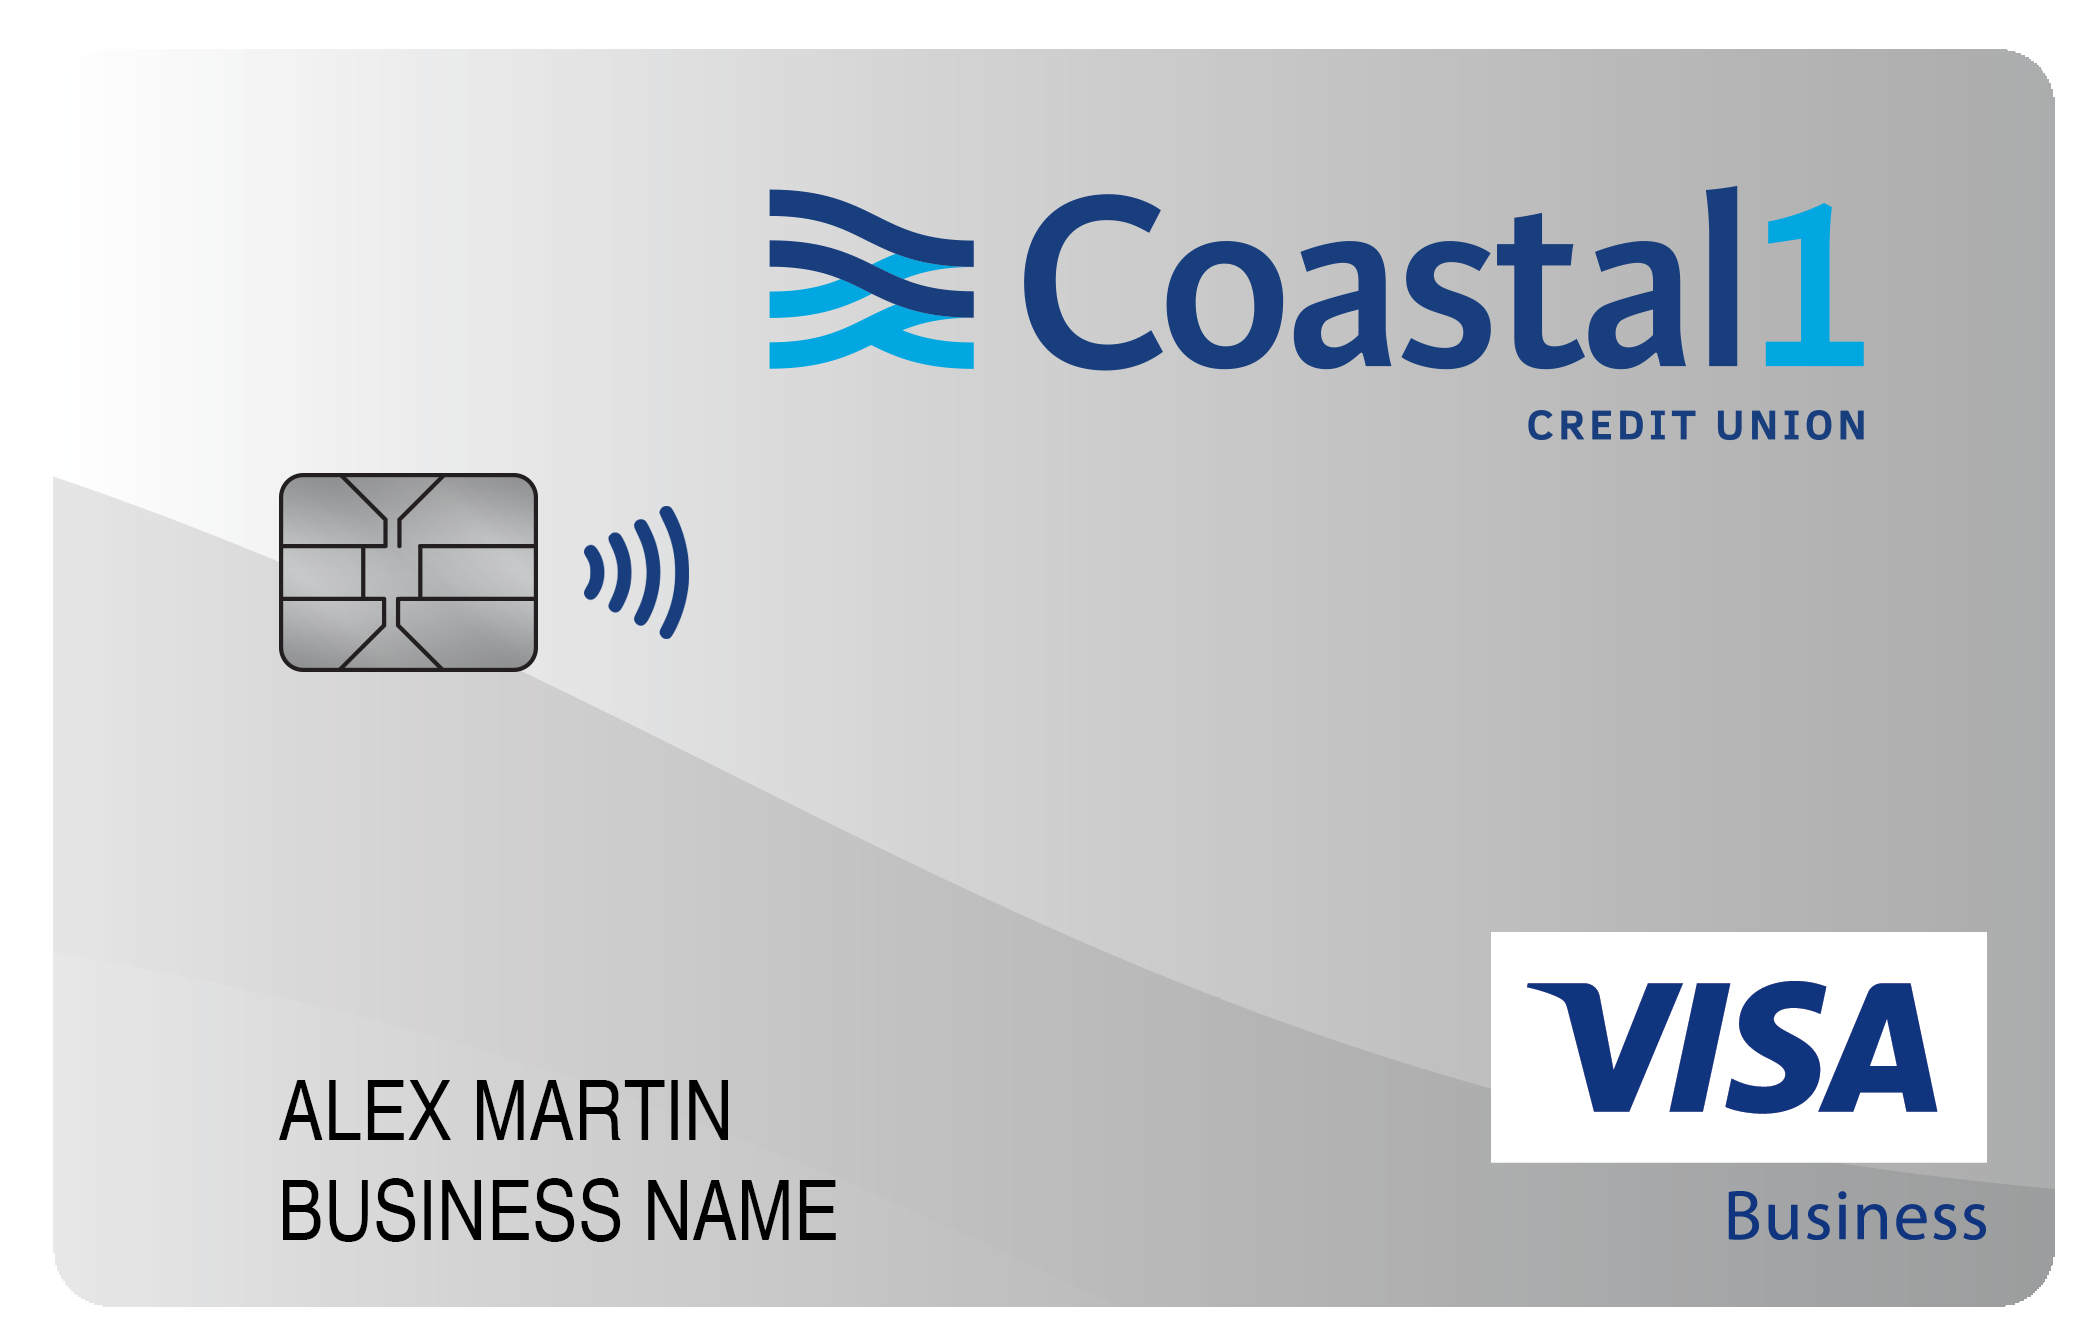 Coastal1 Credit Union Business Card Card